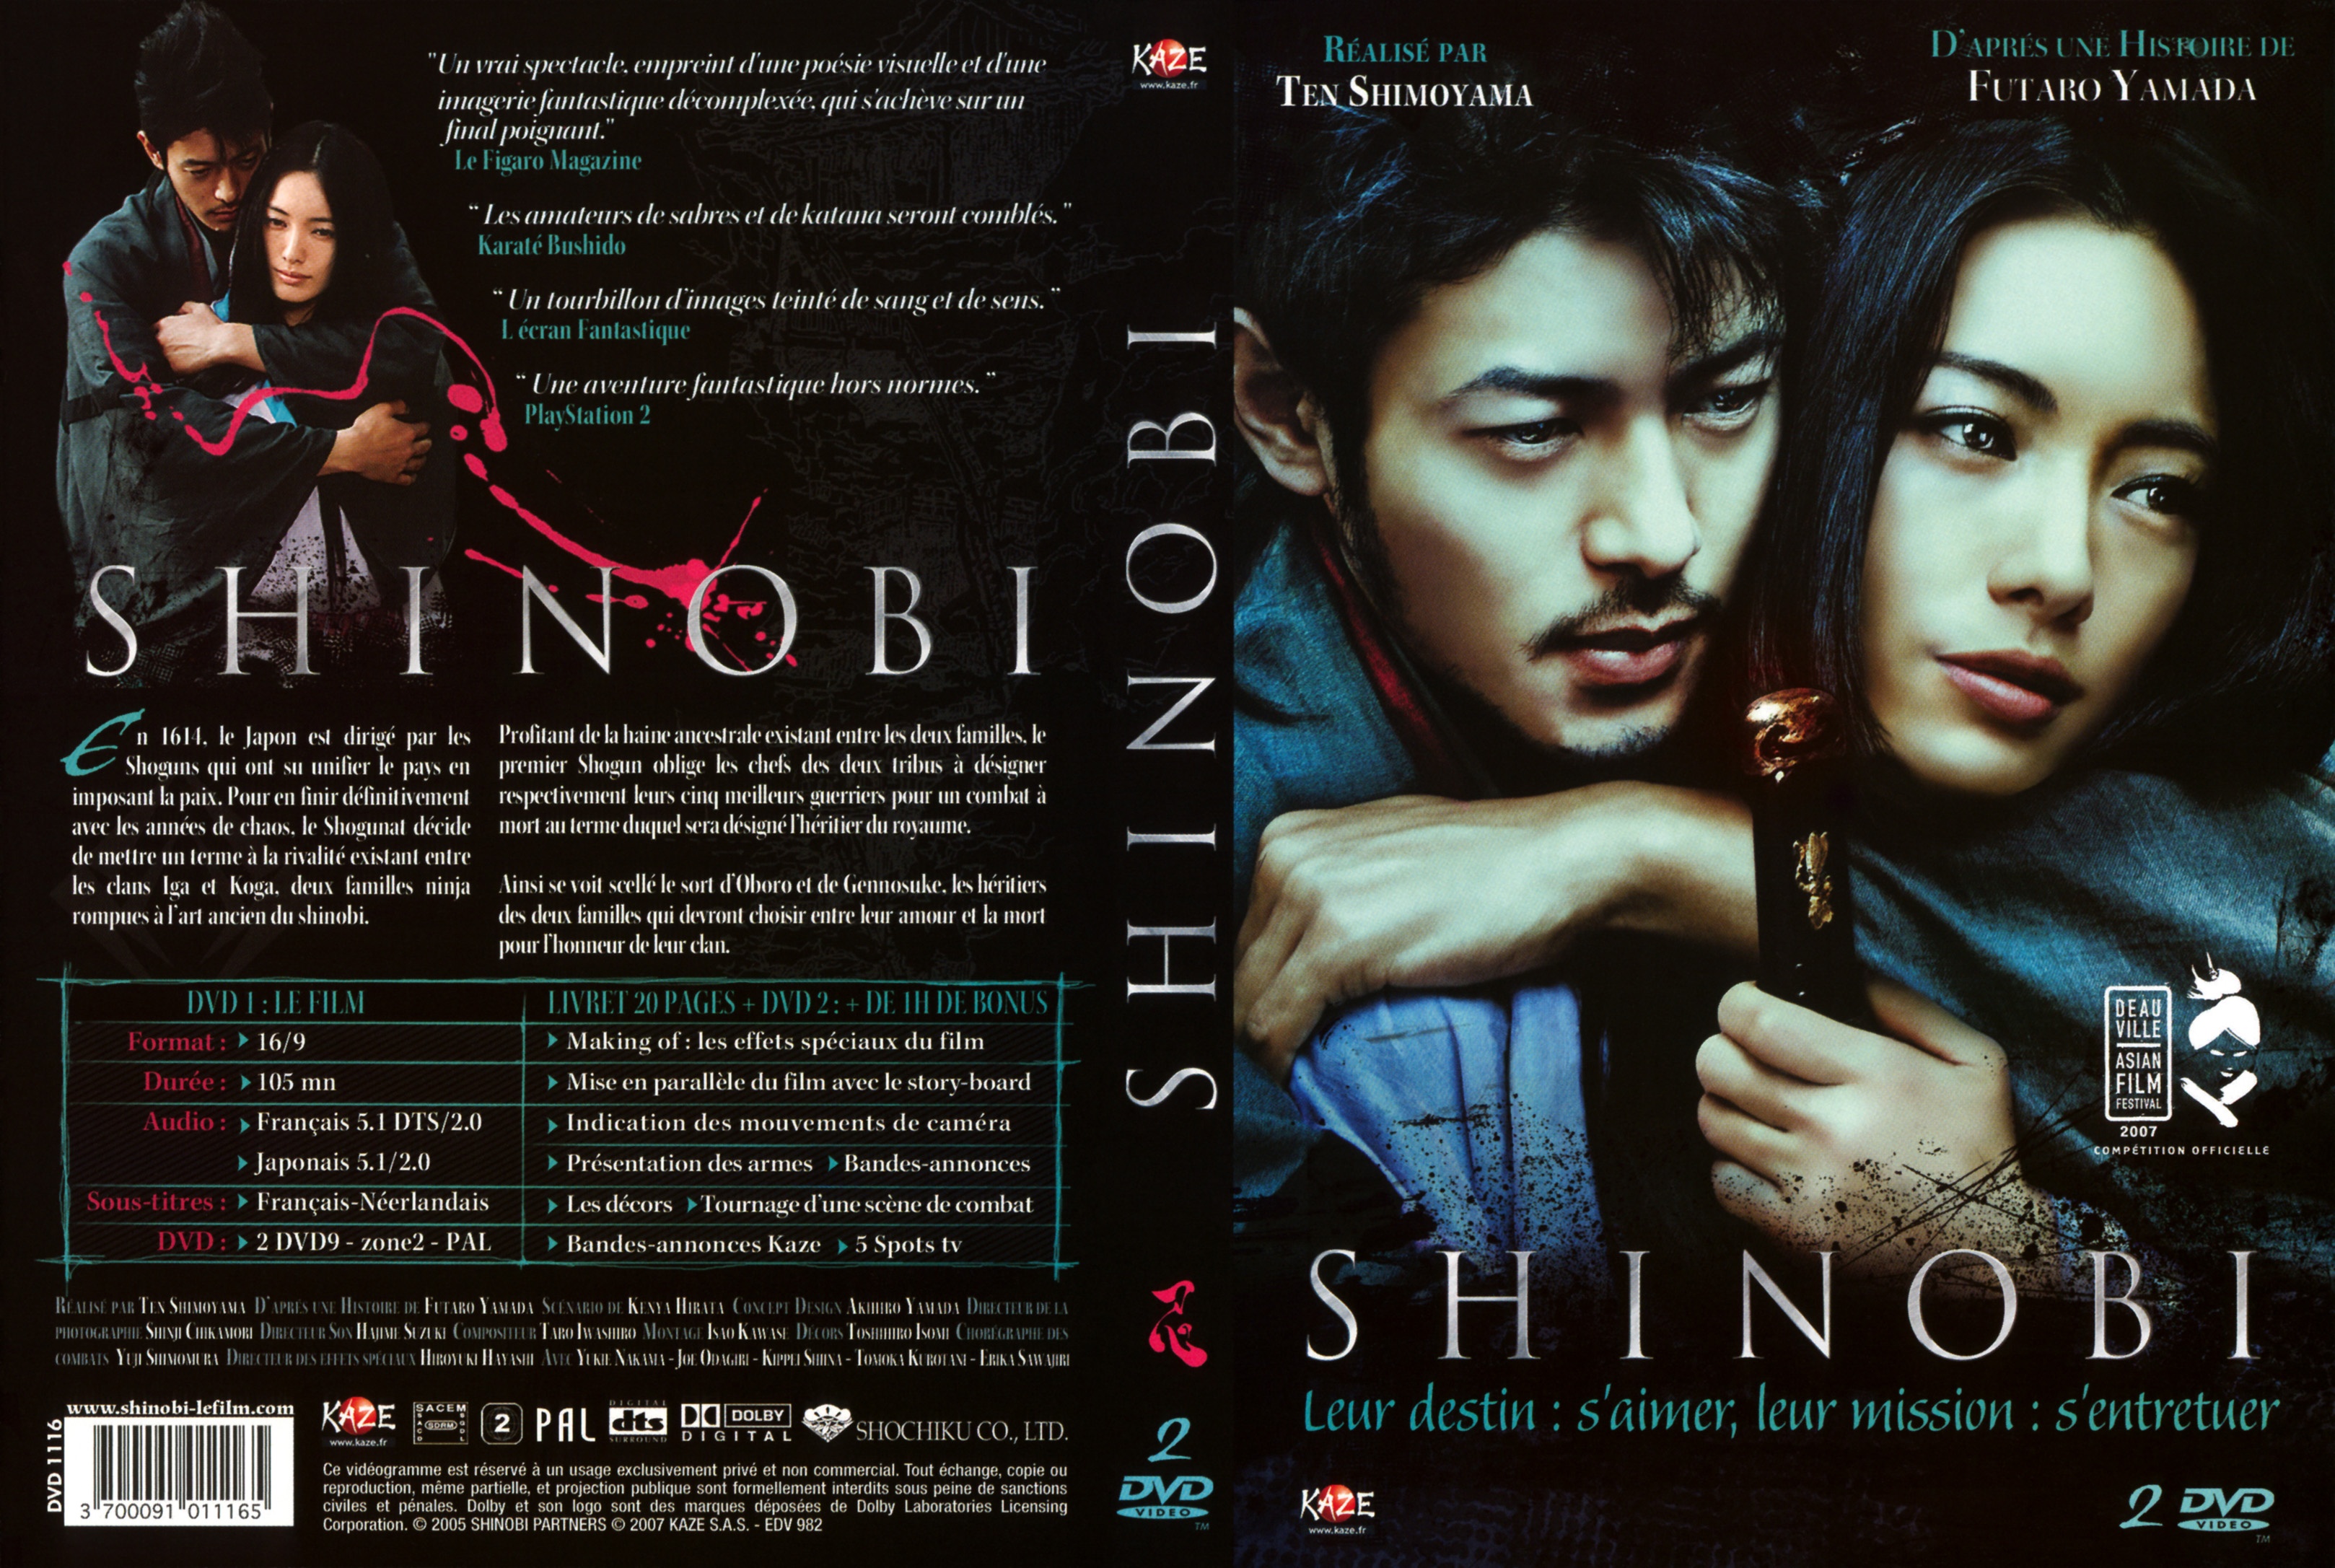 Jaquette DVD Shinobi